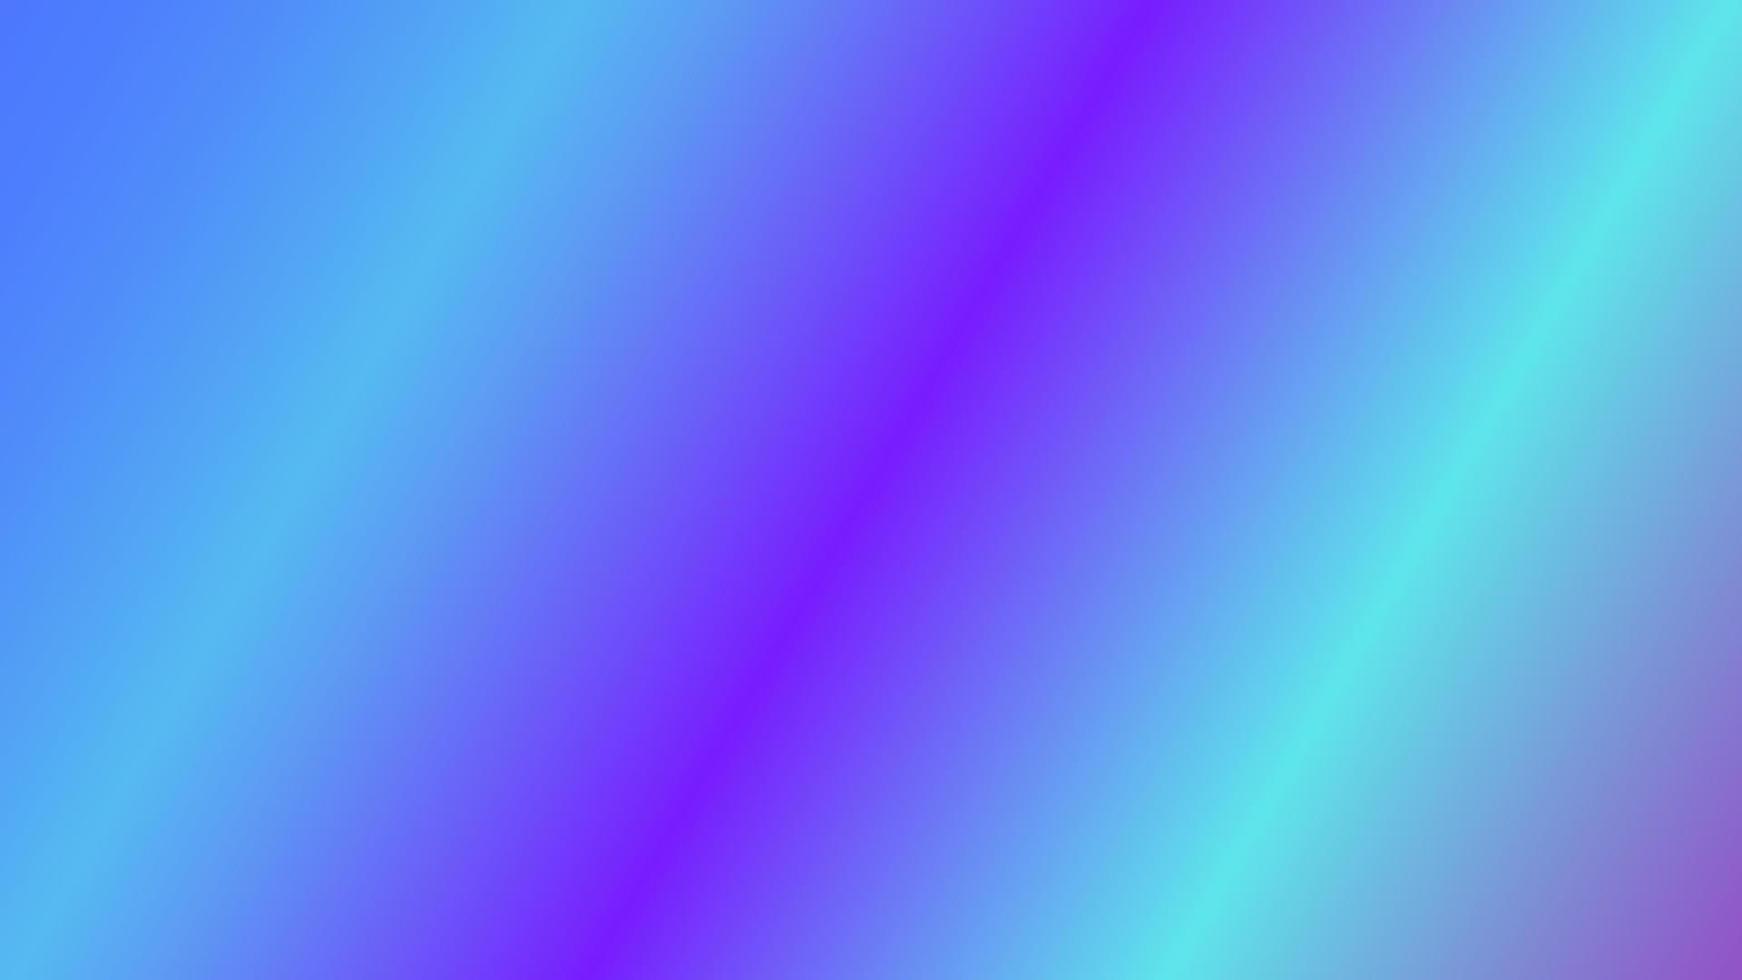 Abstract gradient background blue aqua elegant style perfect for design, wallpaper, promotion, presentation, website, banner etc. illustration background vector